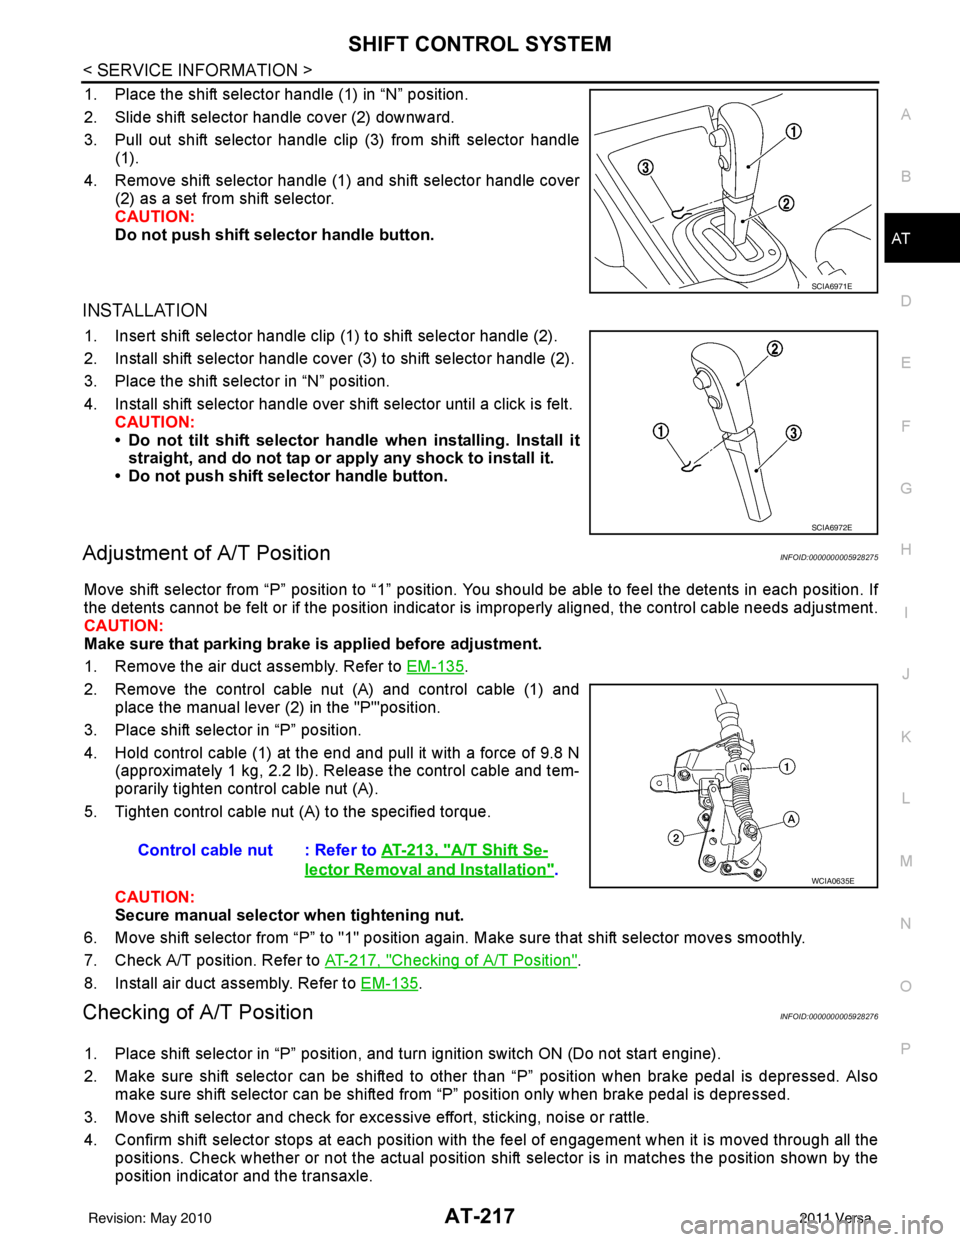 NISSAN LATIO 2011  Service Repair Manual SHIFT CONTROL SYSTEMAT-217
< SERVICE INFORMATION >
DE
F
G H
I
J
K L
M A
B
AT
N
O P
1. Place the shift selector handle (1) in “N” position.
2. Slide shift selector handle cover (2) downward.
3. Pul